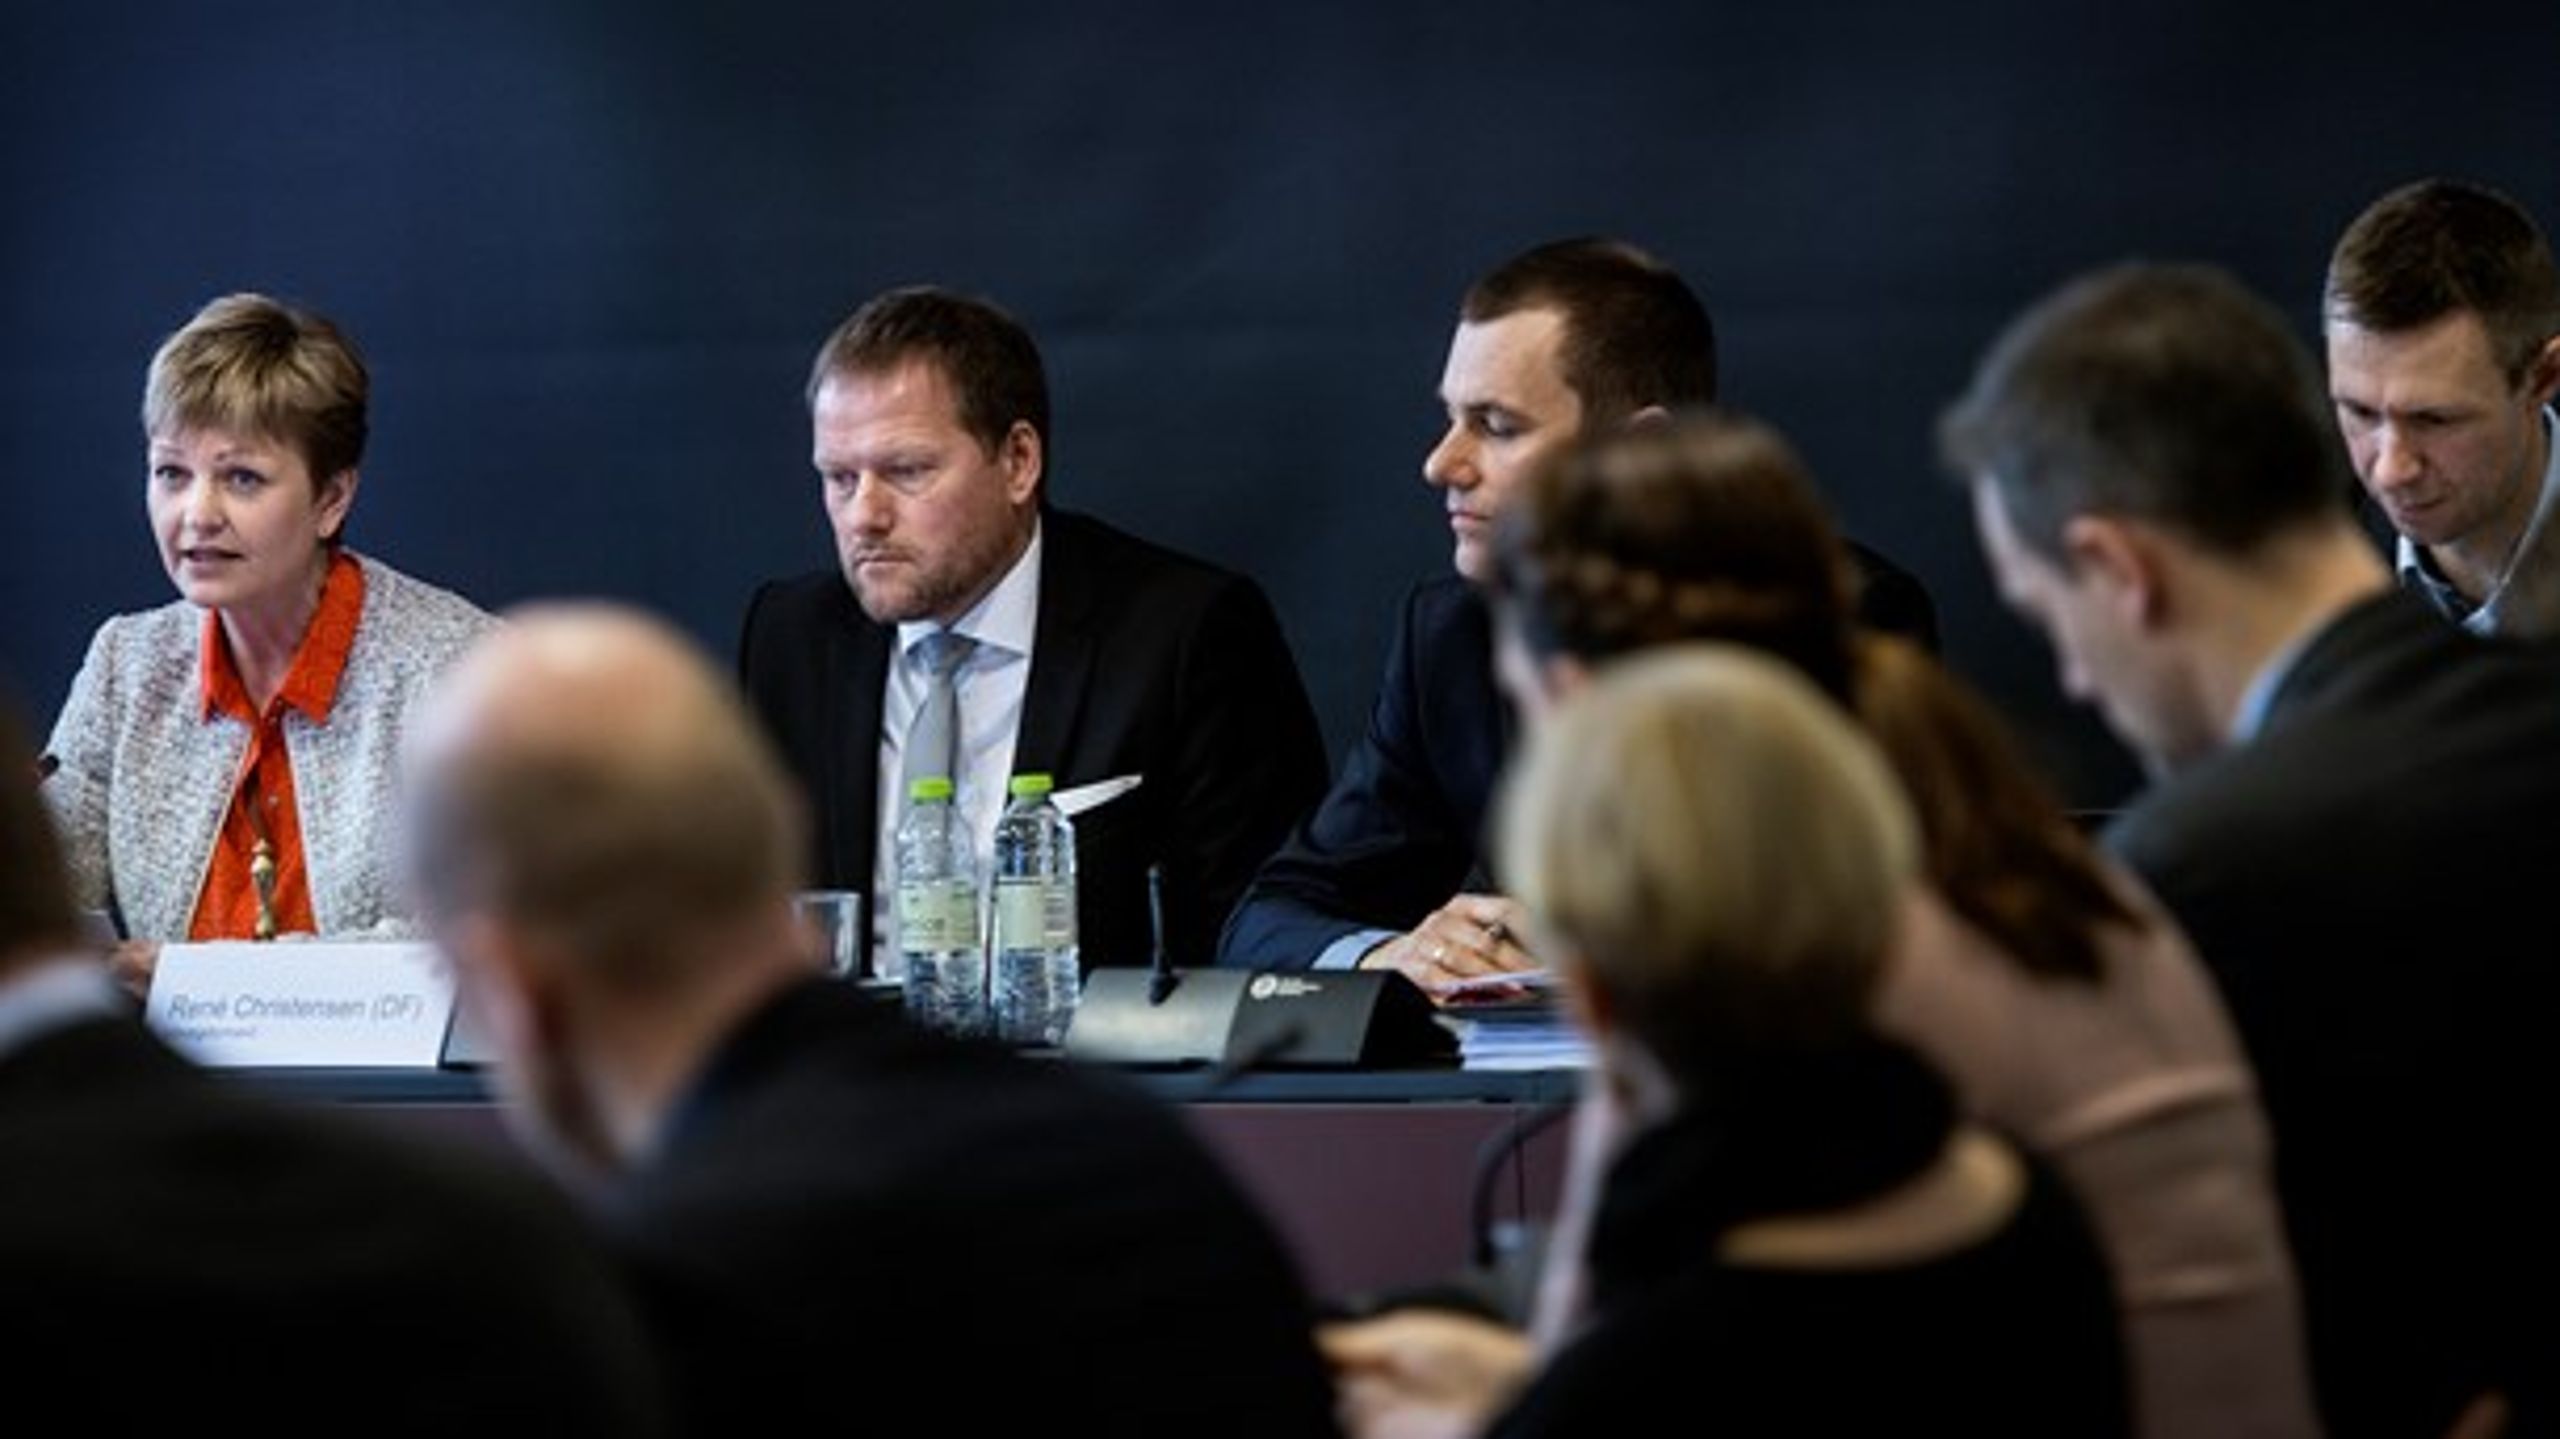 Den daværende miljø- og fødevareminister Eva Kjer Hansen (V) til høring i sit udvalg 23. februar 2016. Et eksempel på den geniale ordning med ordførerskaber og udvalgsopdelinger, mener Torsten Buhl.